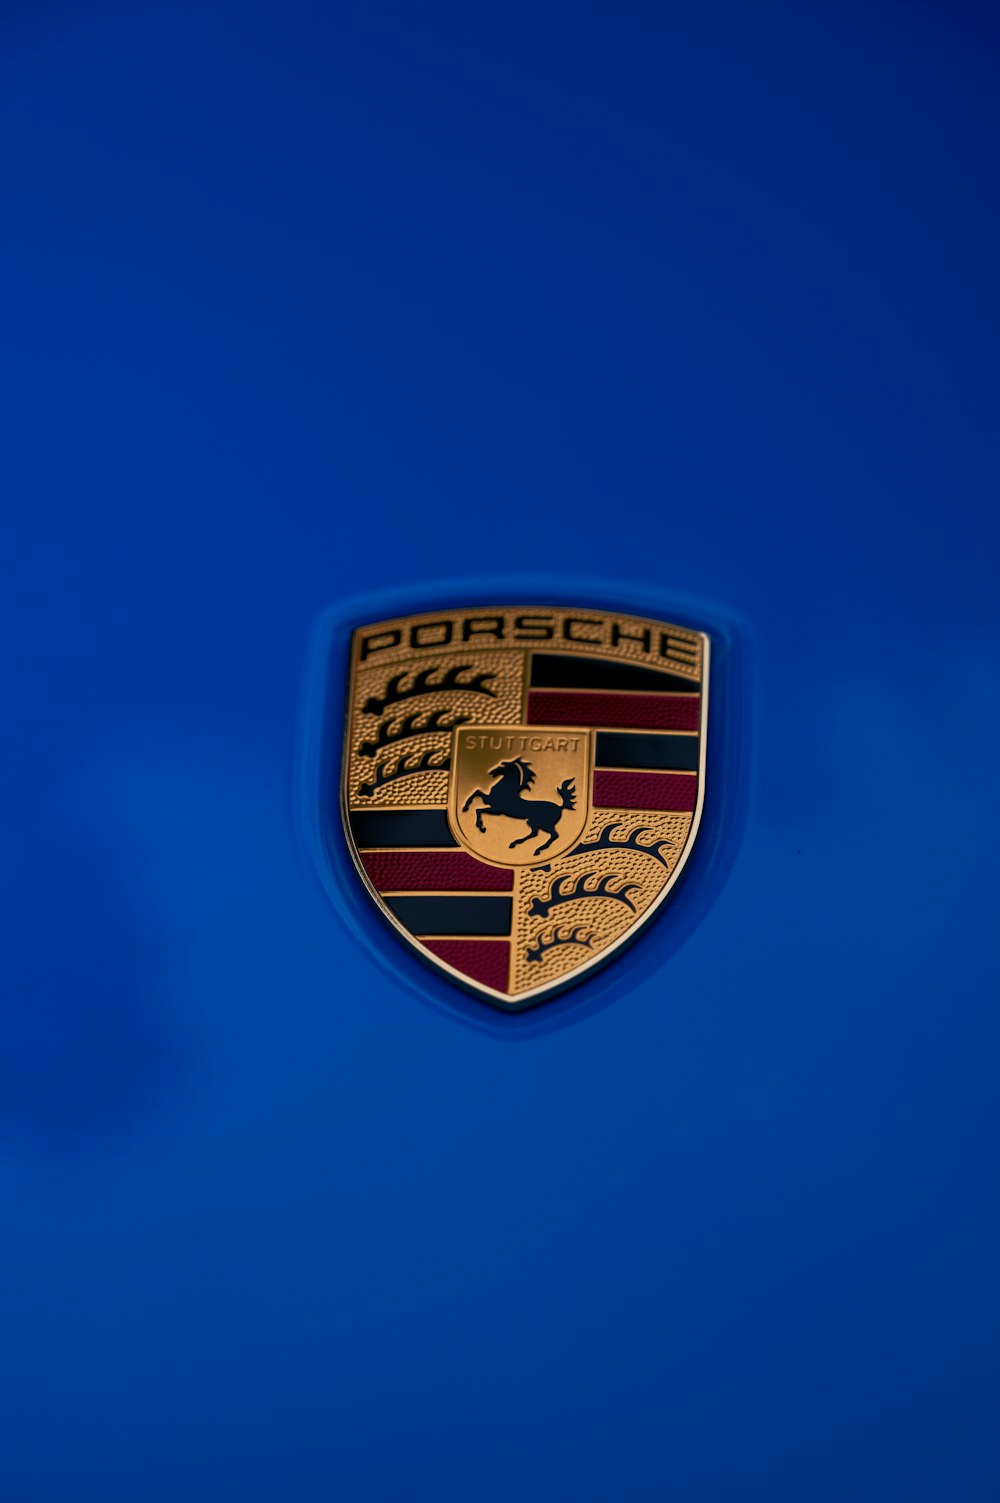 a close up of a car's emblem on a blue background